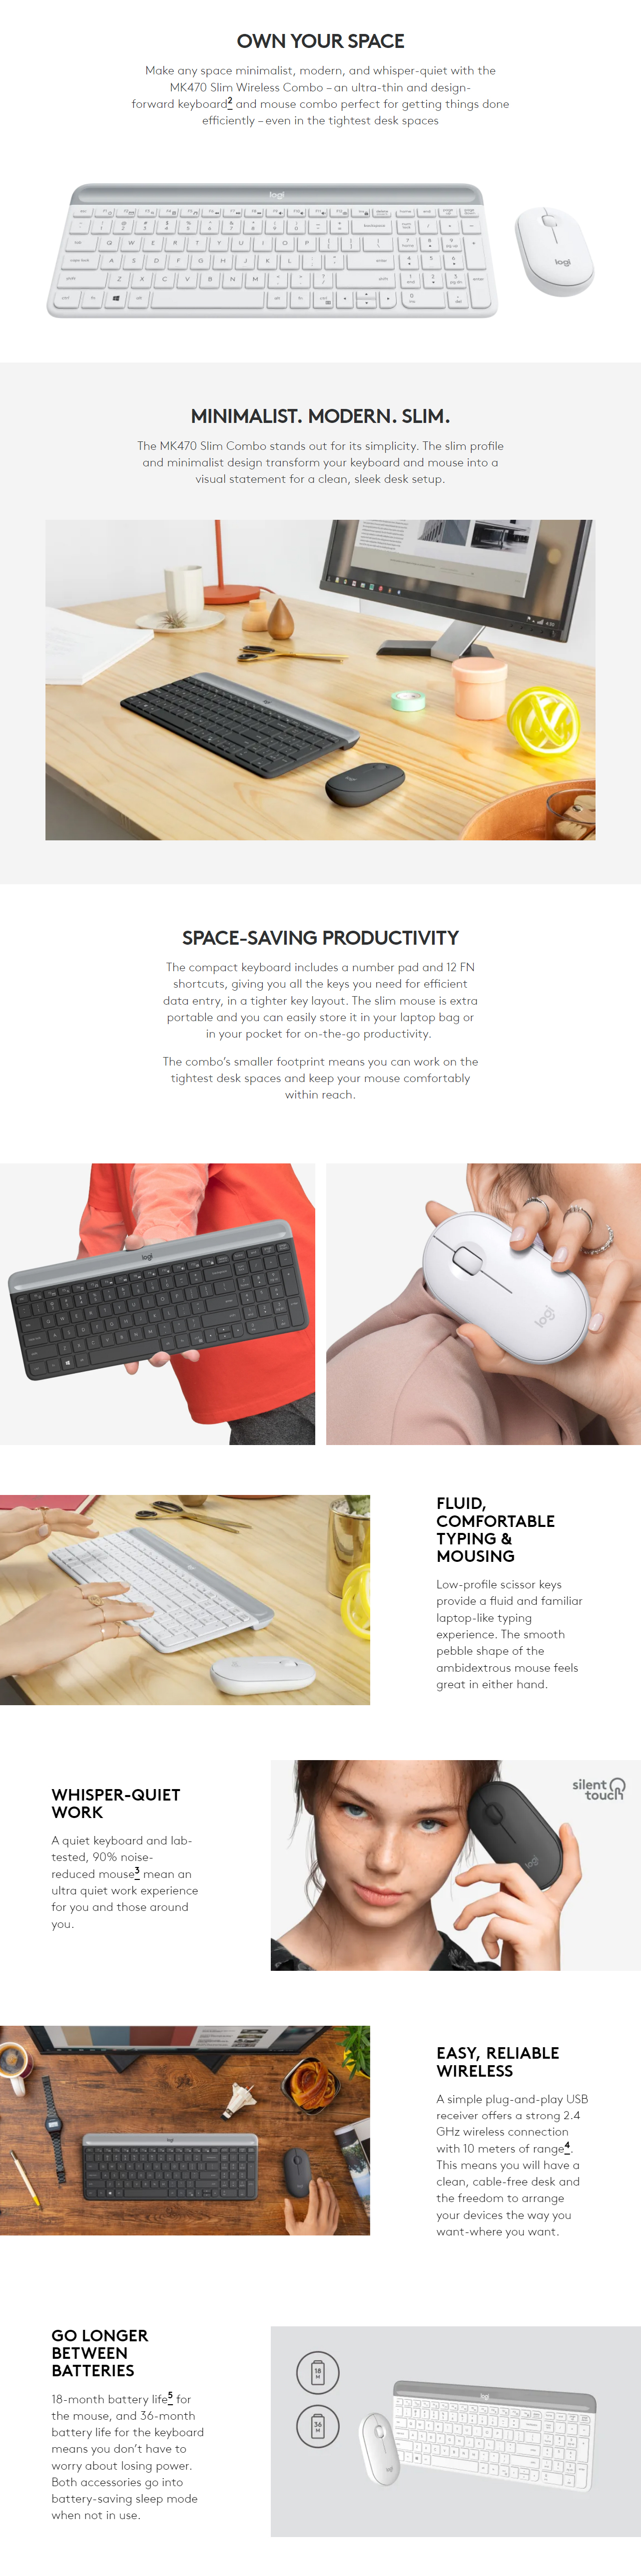 Keyboards-Logitech-MK470-Slim-Wireless-Keyboard-and-Mouse-Combo-Graphite-1